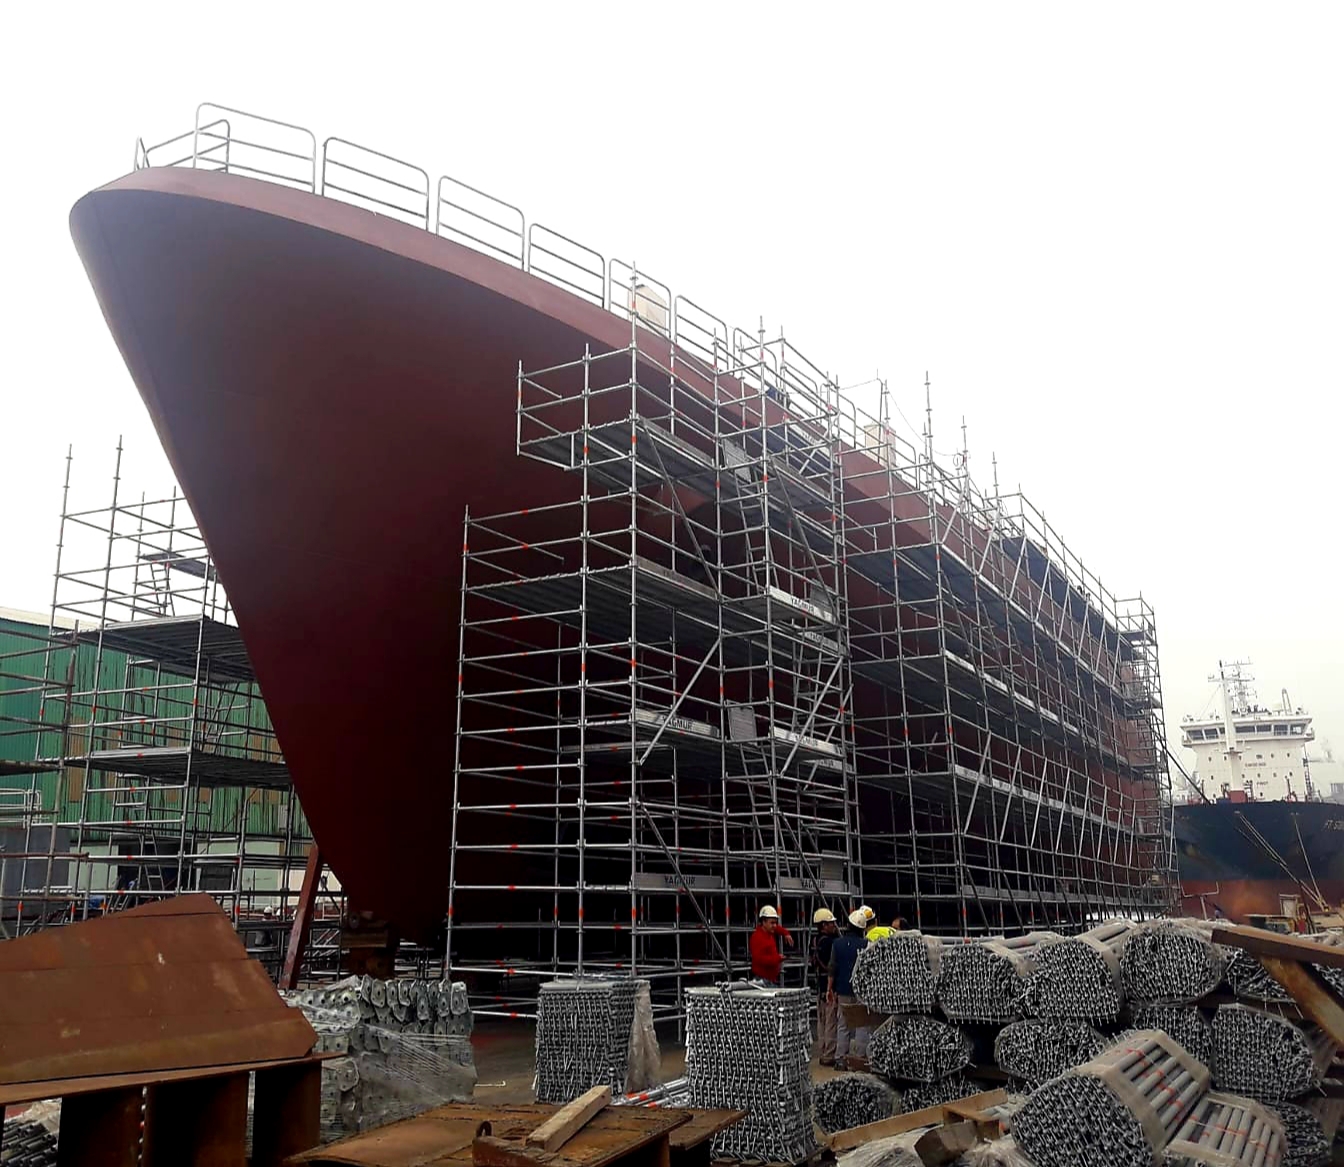 Flanged Shipyard 01 - Multidirectional Scaffolding System